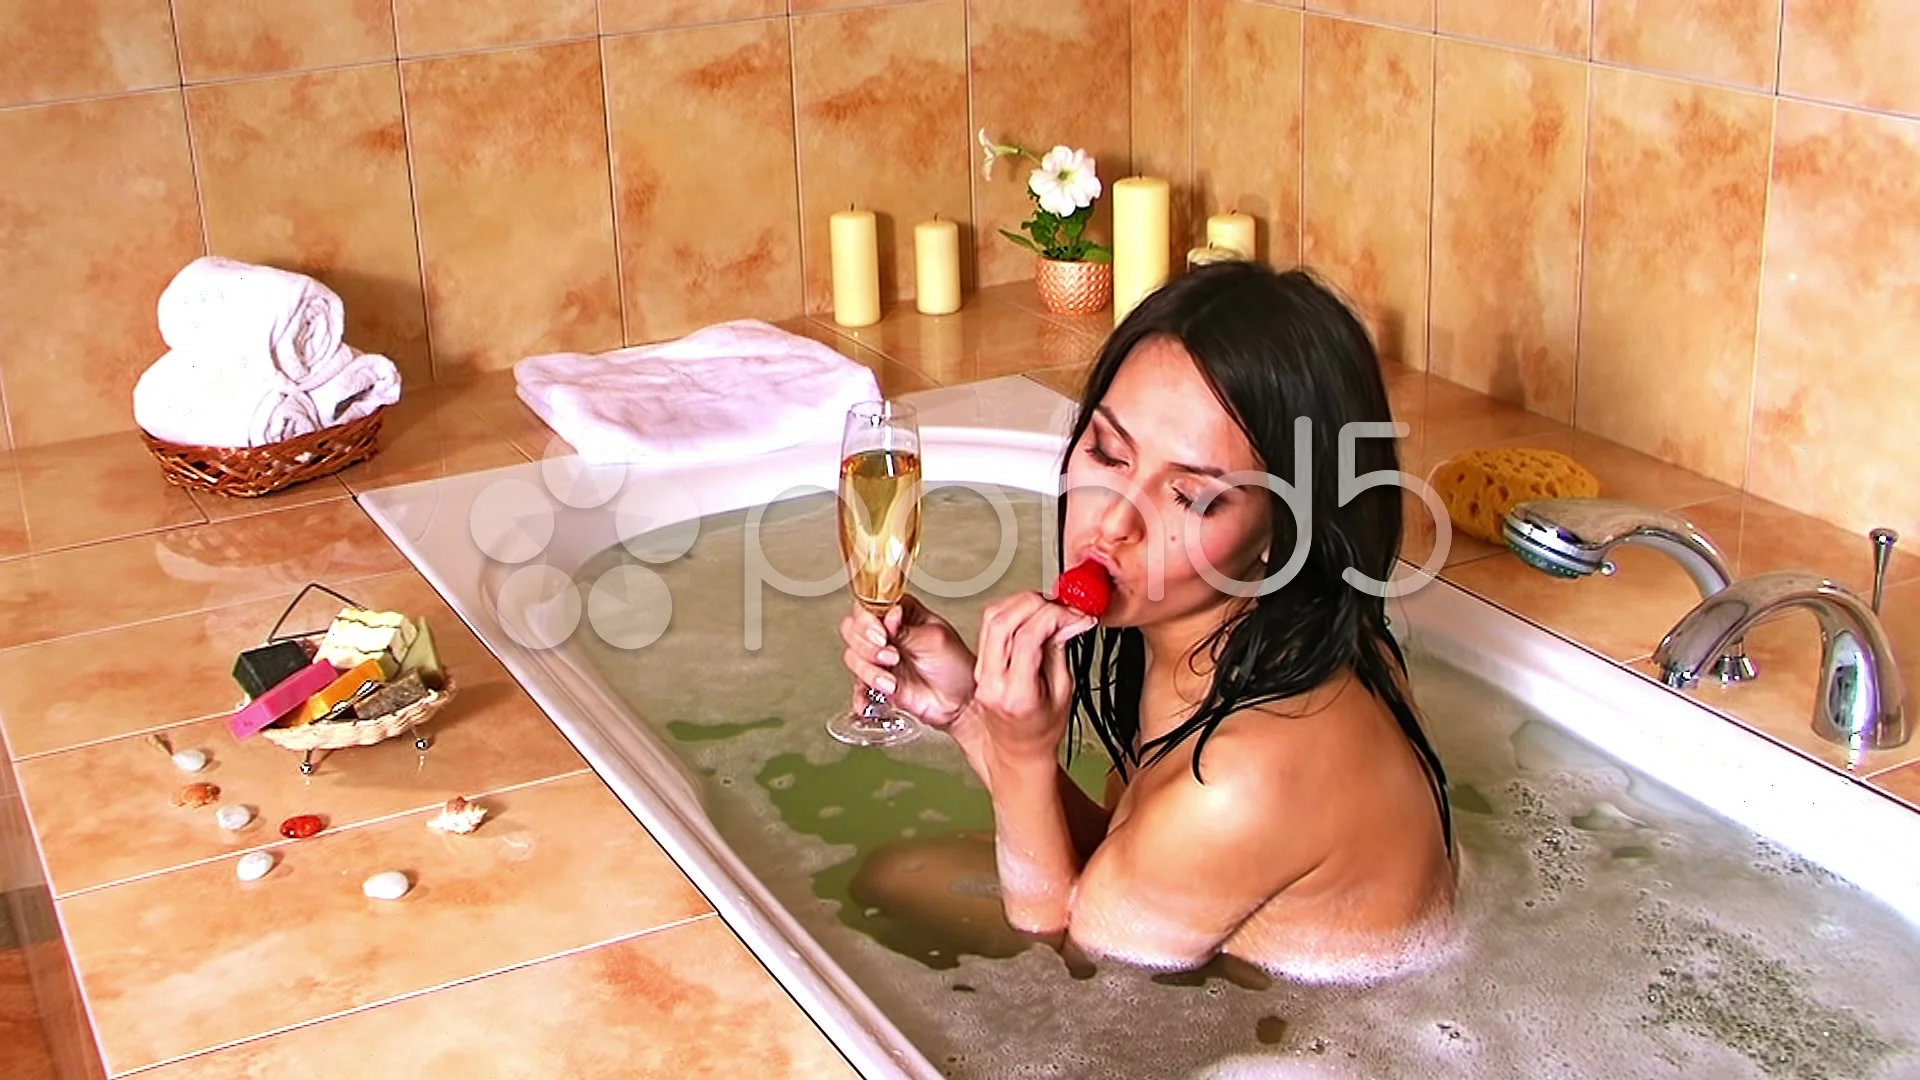 https://images.pond5.com/young-woman-take-bubble-bath-footage-038126967_prevstill.jpeg